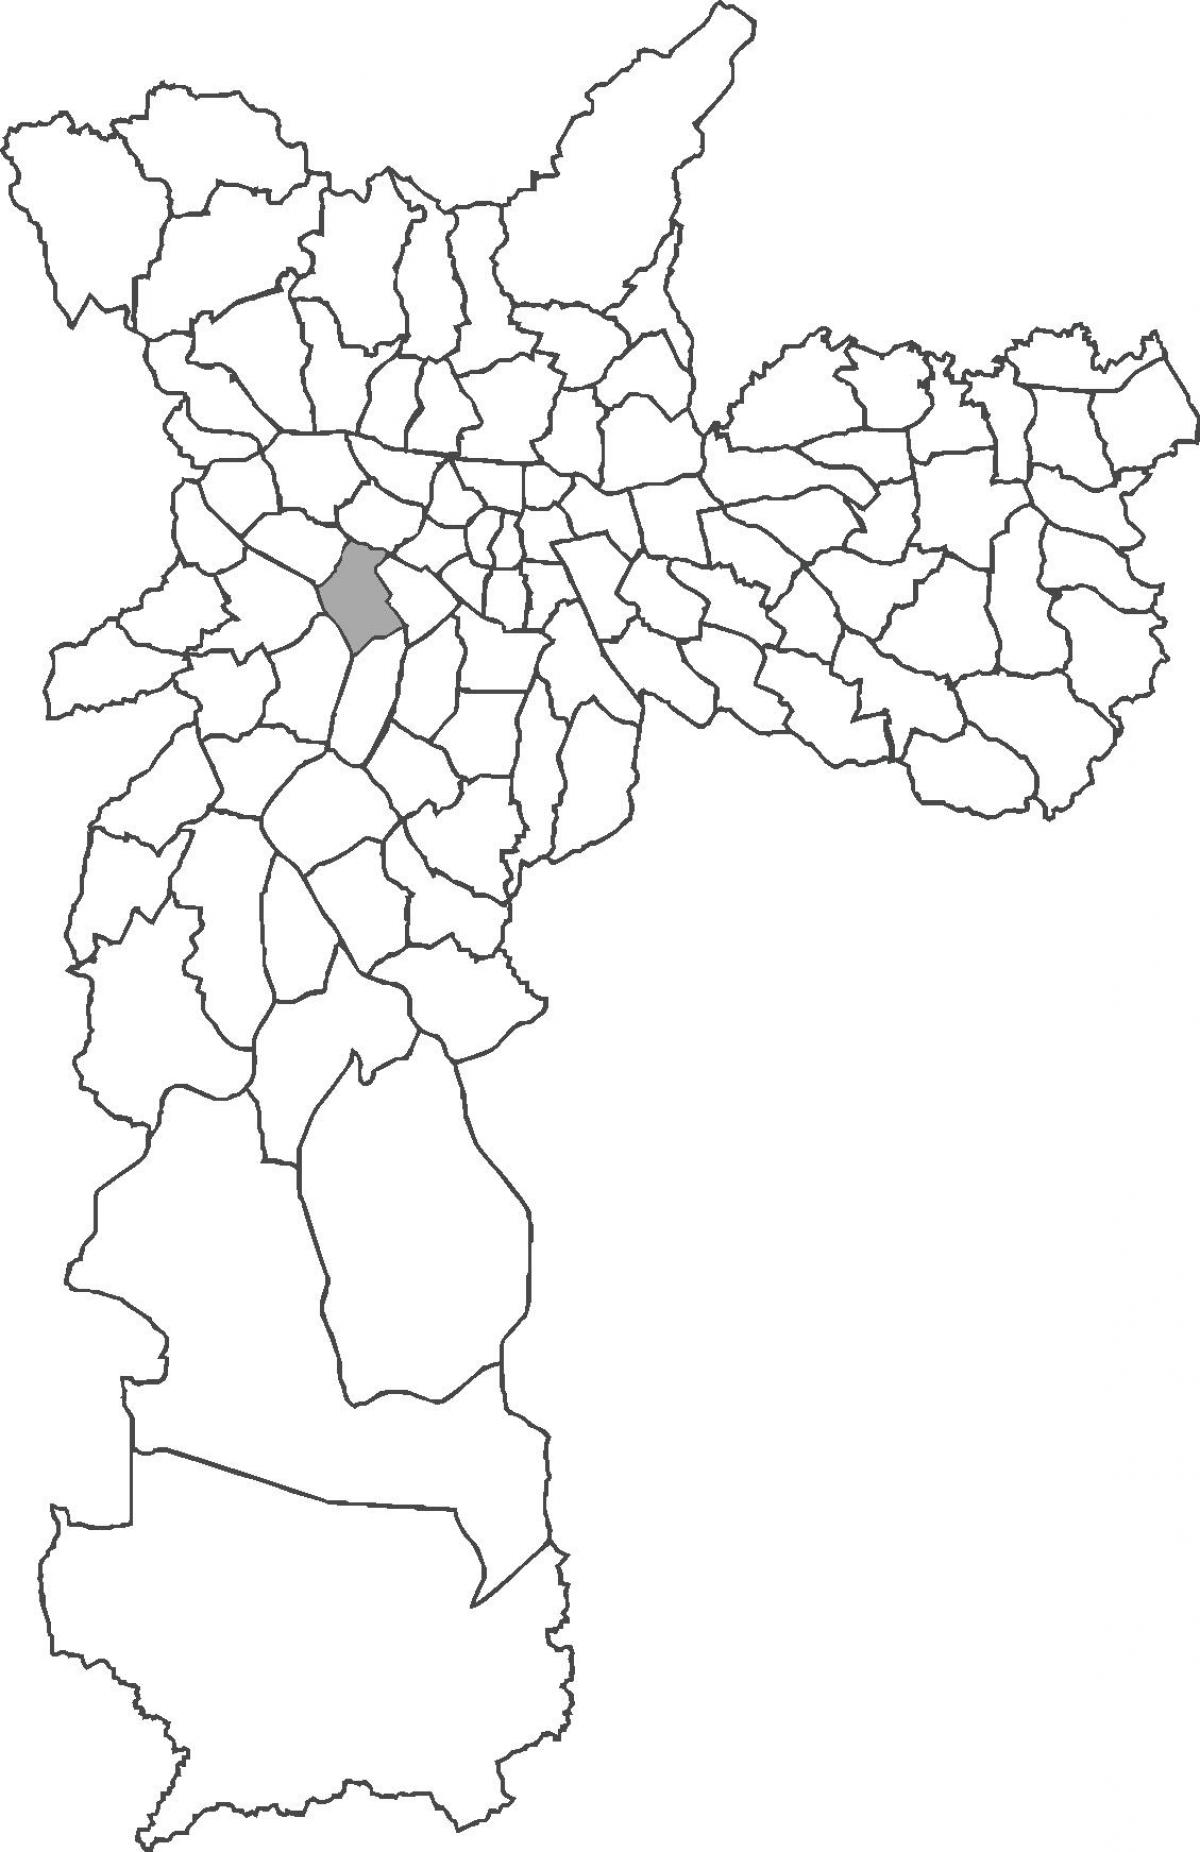 Peta Pinheiros daerah